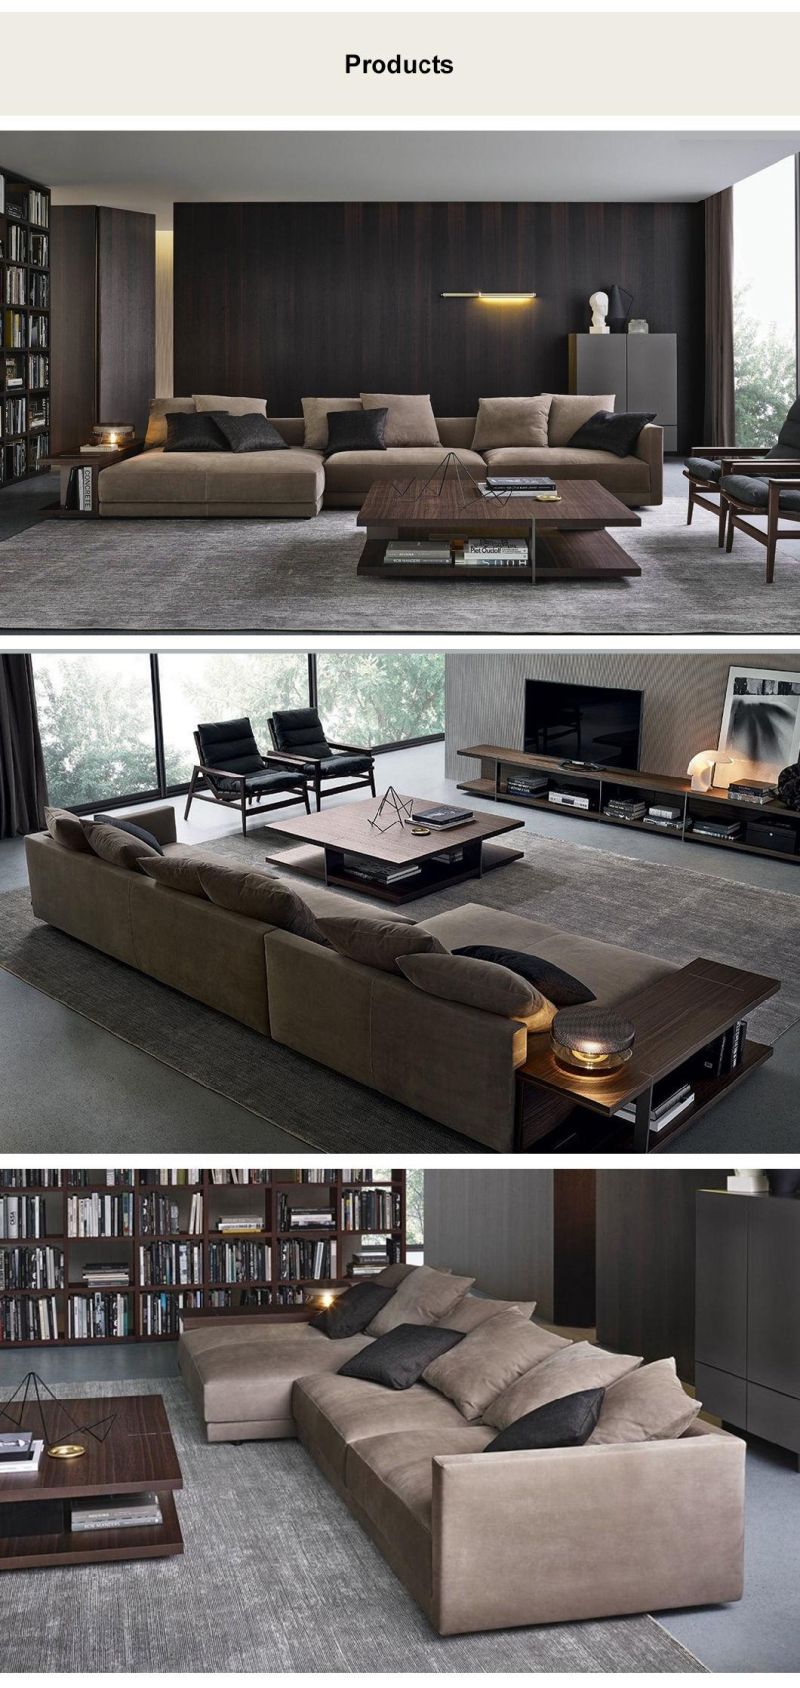 Sofa with Armrest High Back Home Furniture Recliner Sofa